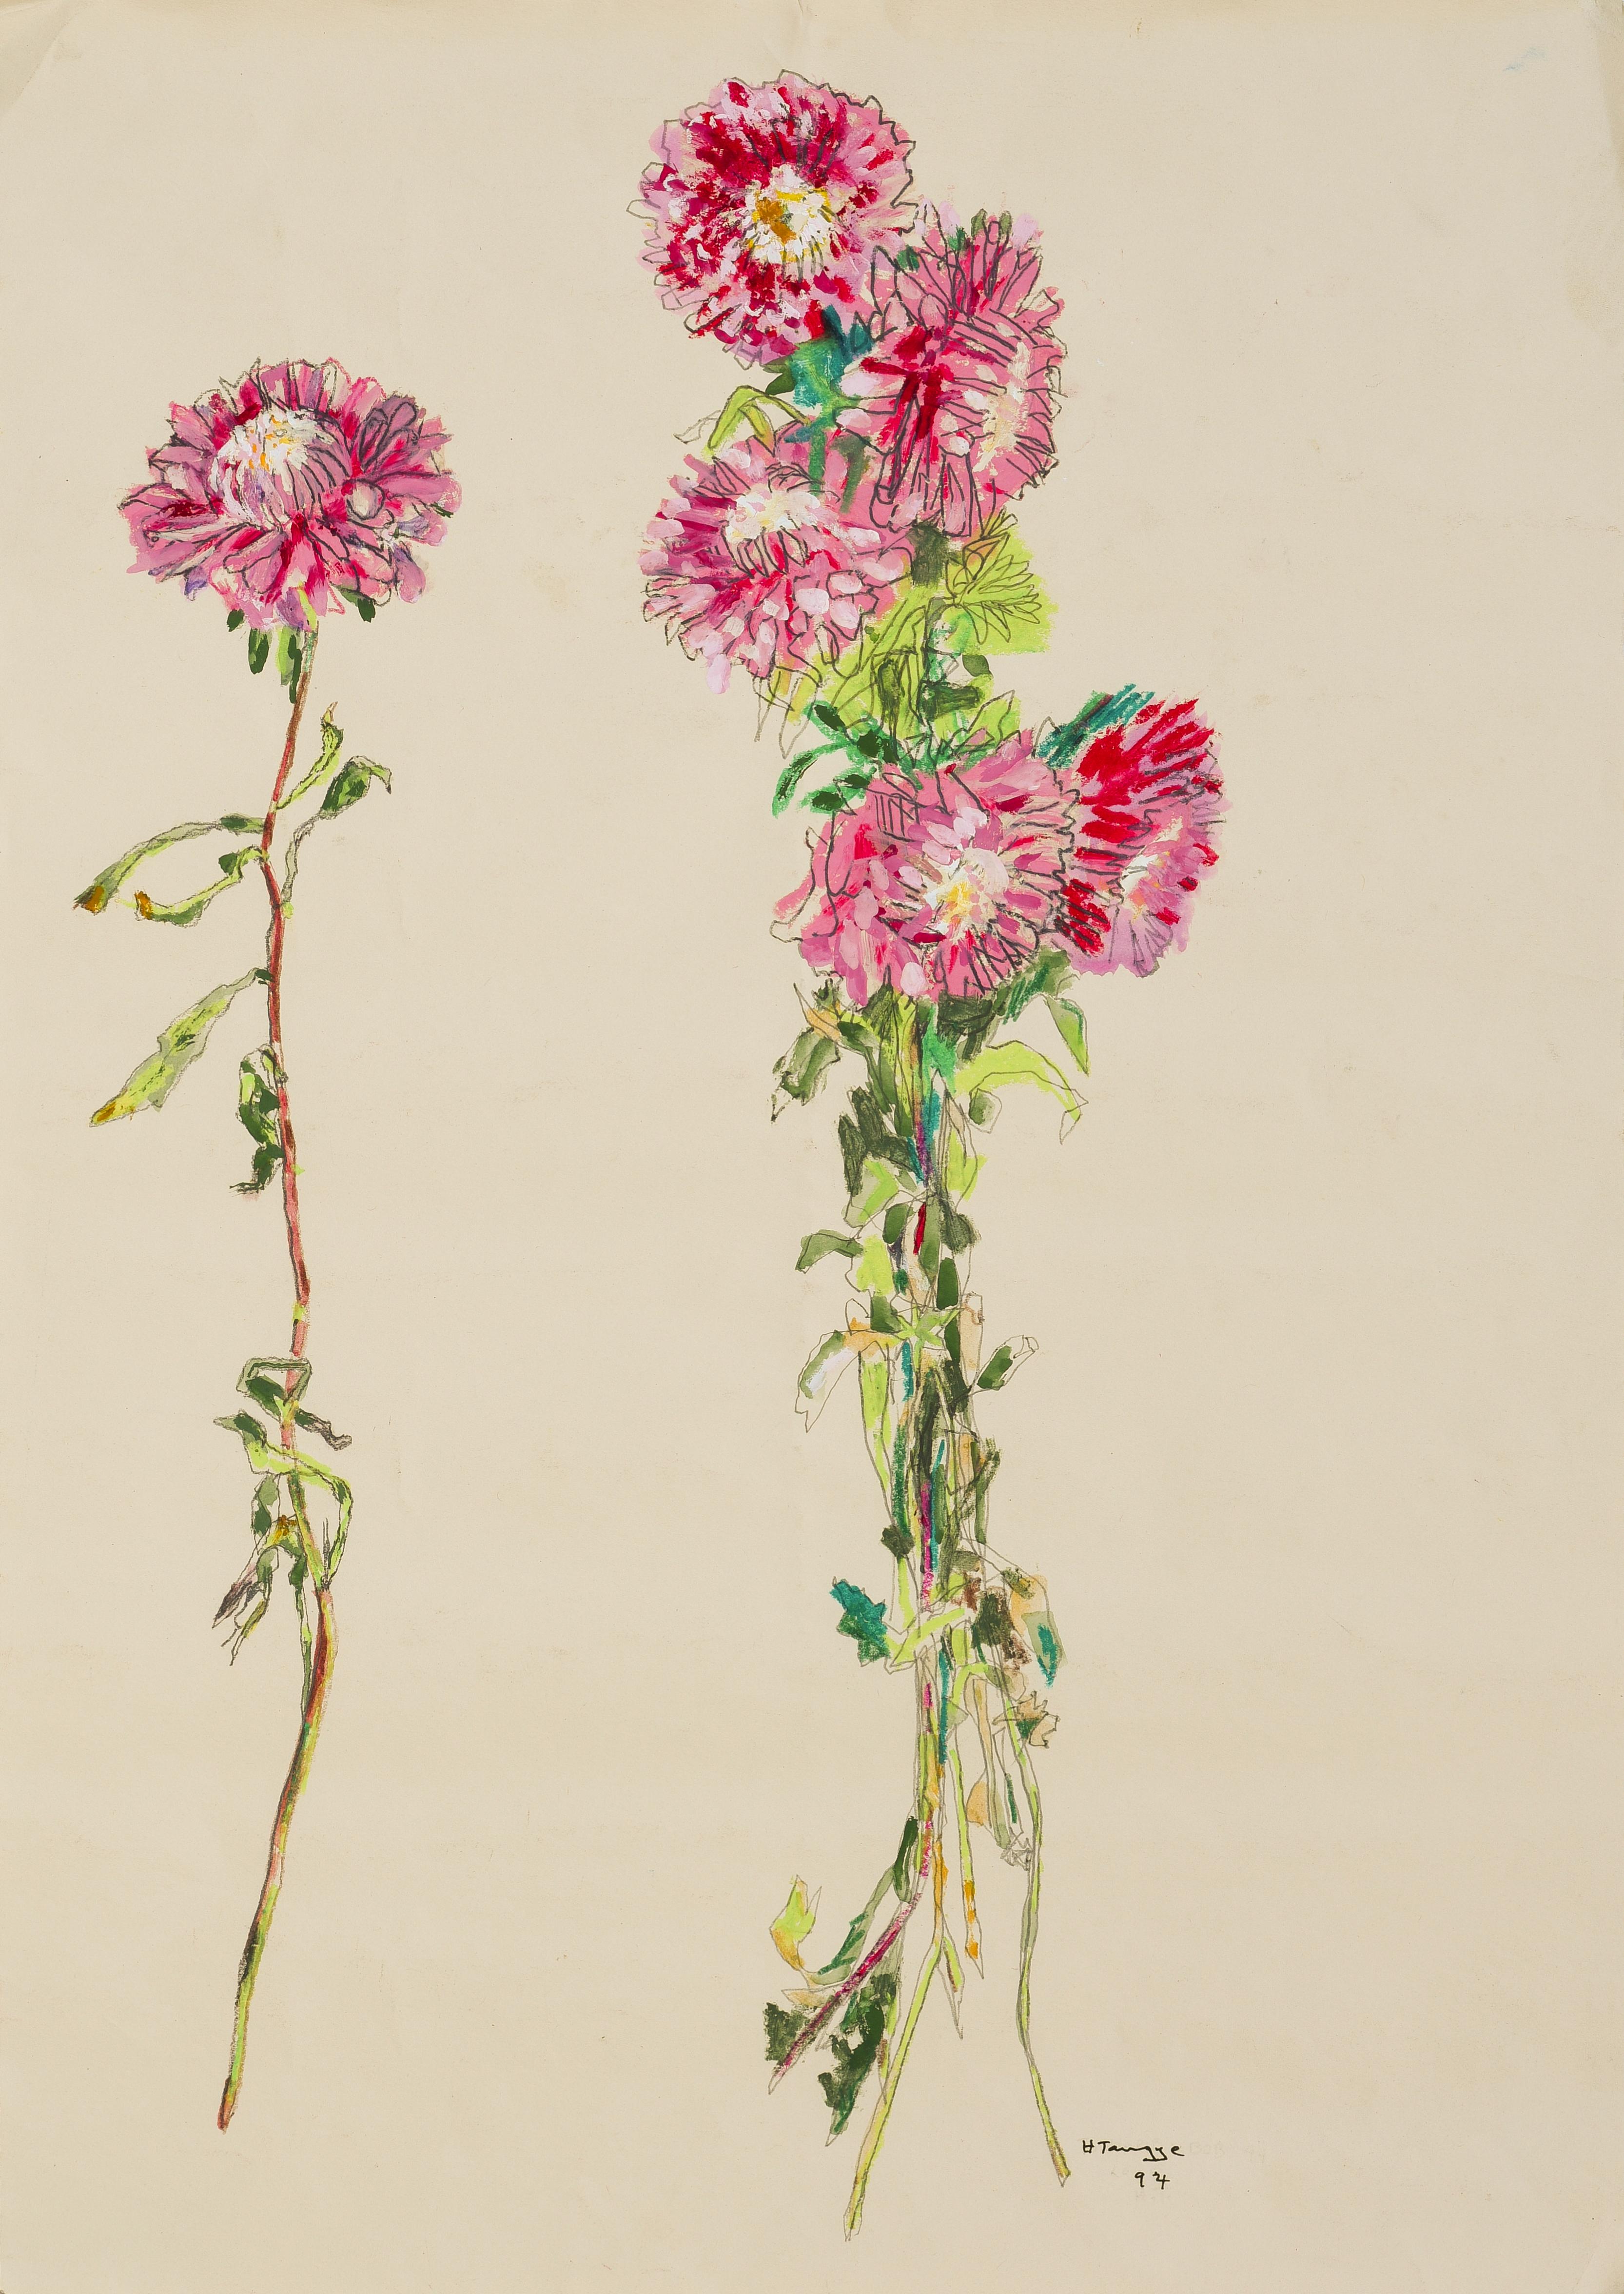 Blumen (Stems), Mixed-Media auf cremefarbenem Papier